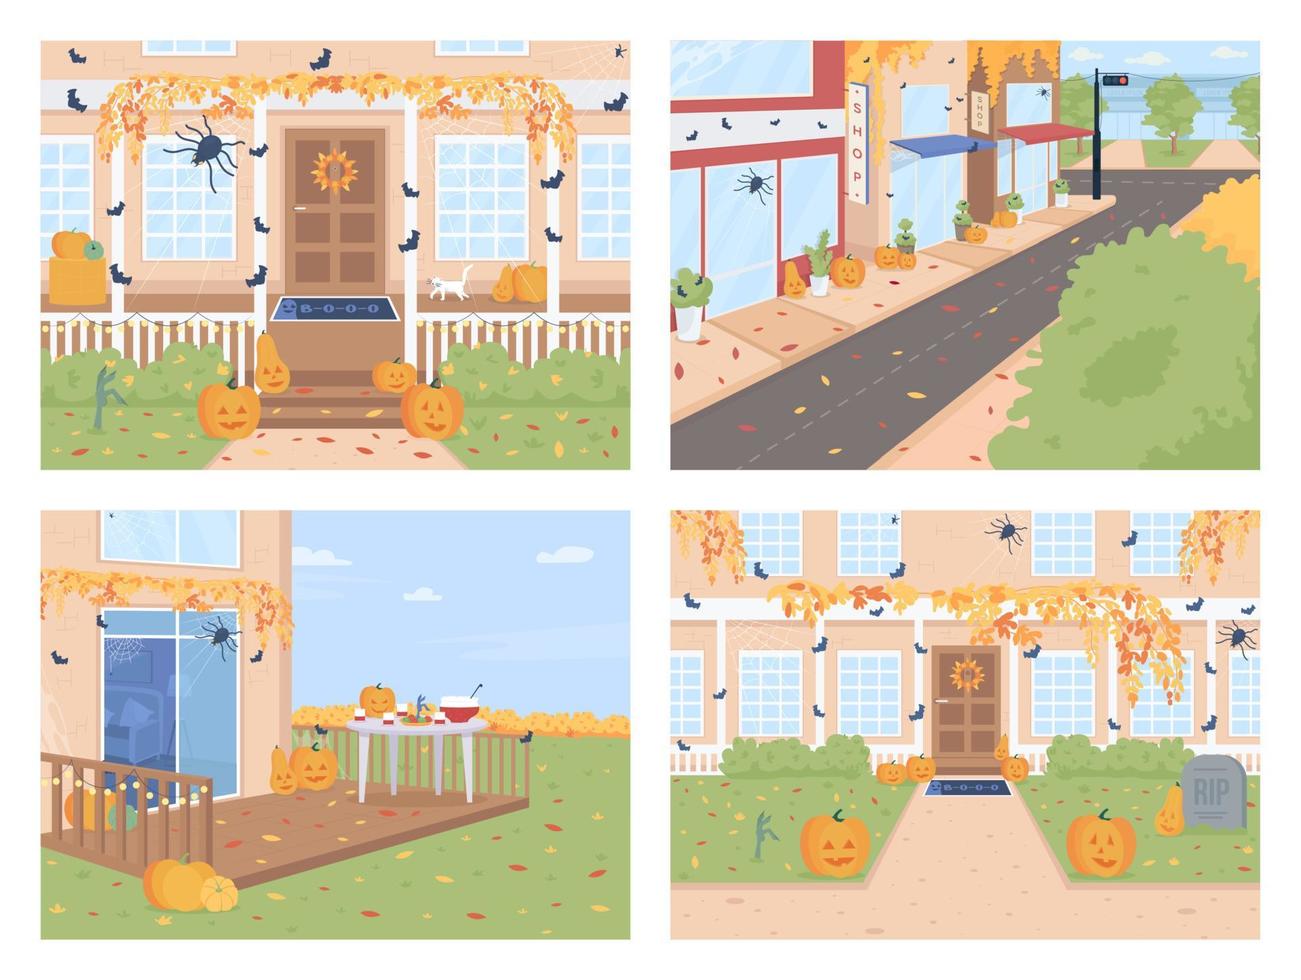 Outdoor Halloween decorations flat color vector illustration set